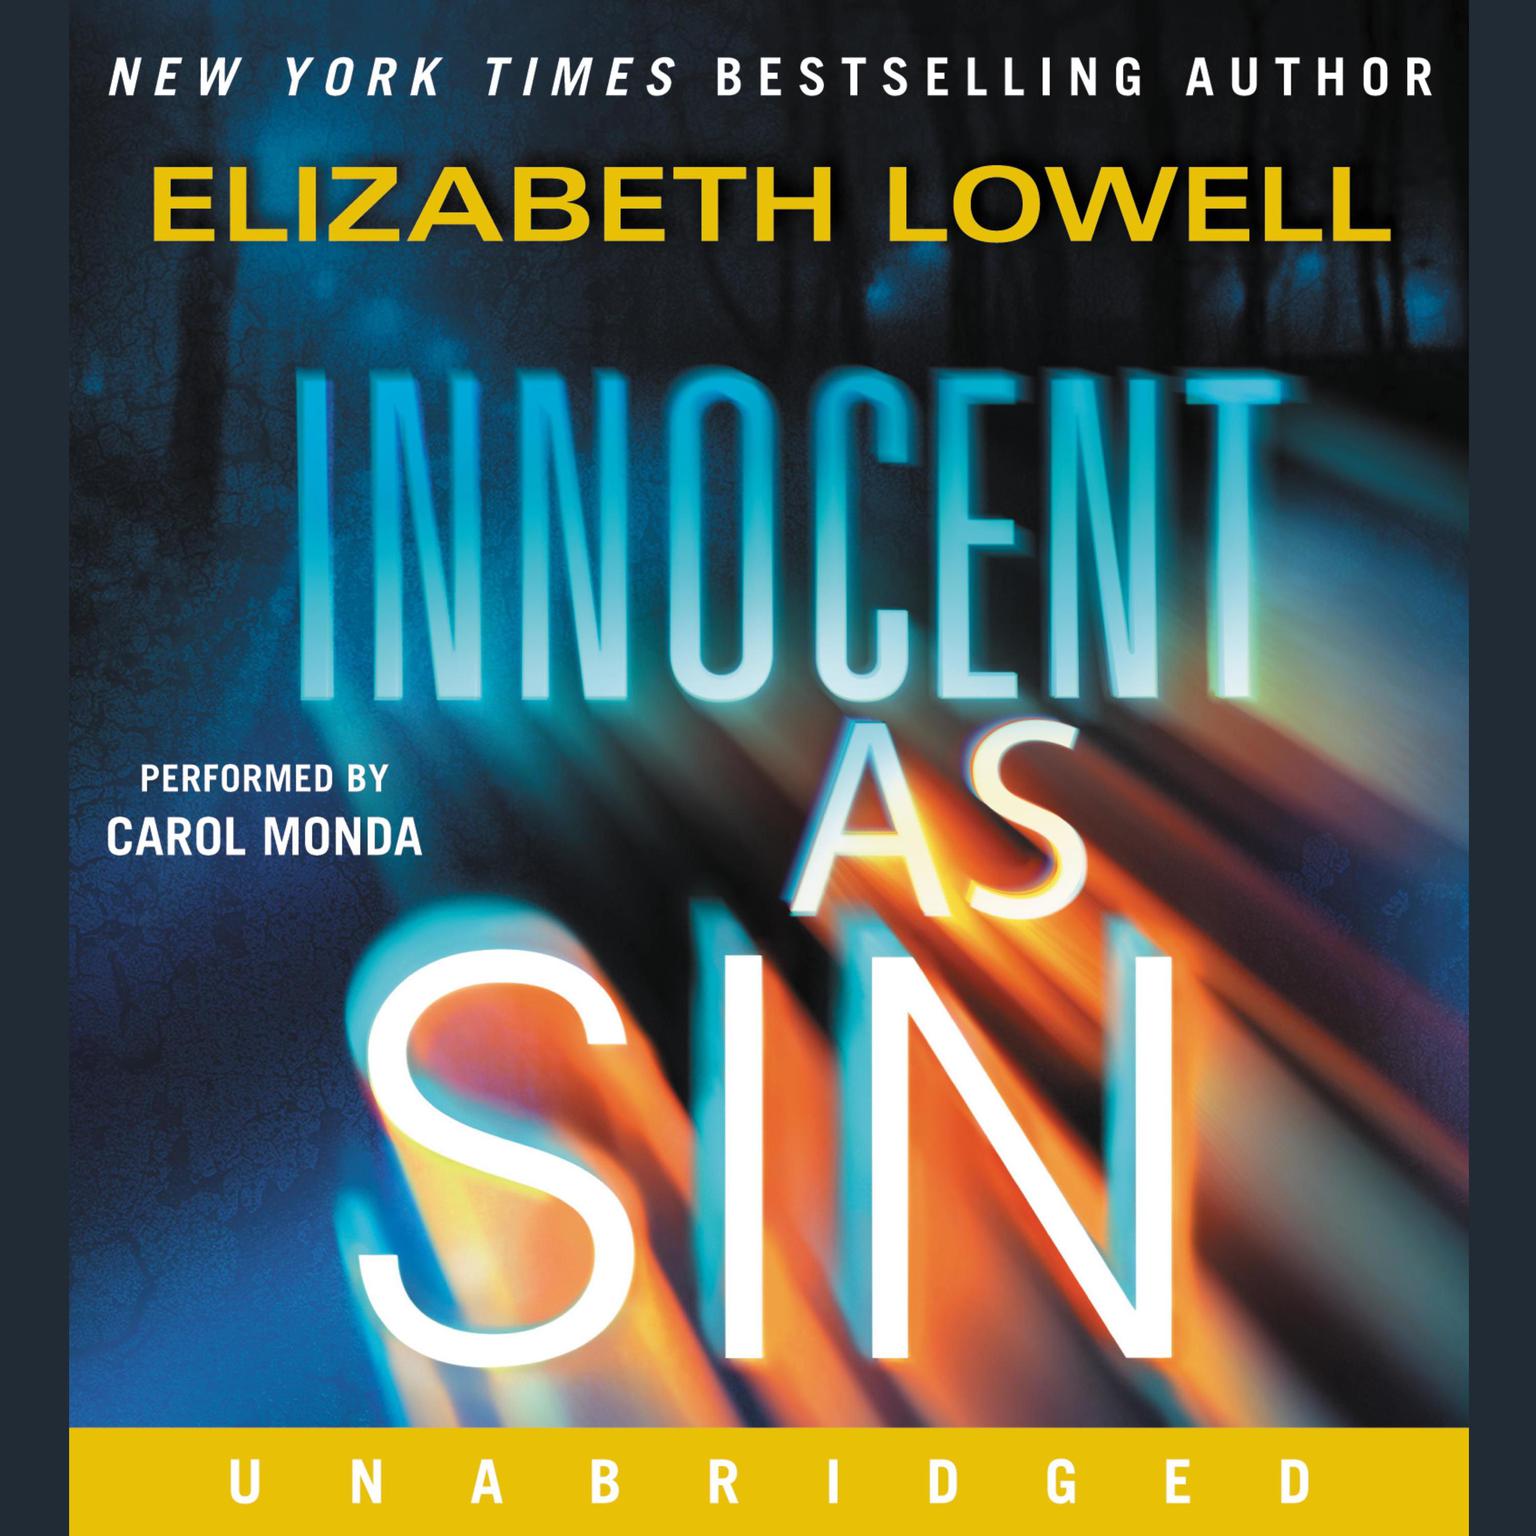 Innocent as Sin Audiobook, by Elizabeth Lowell